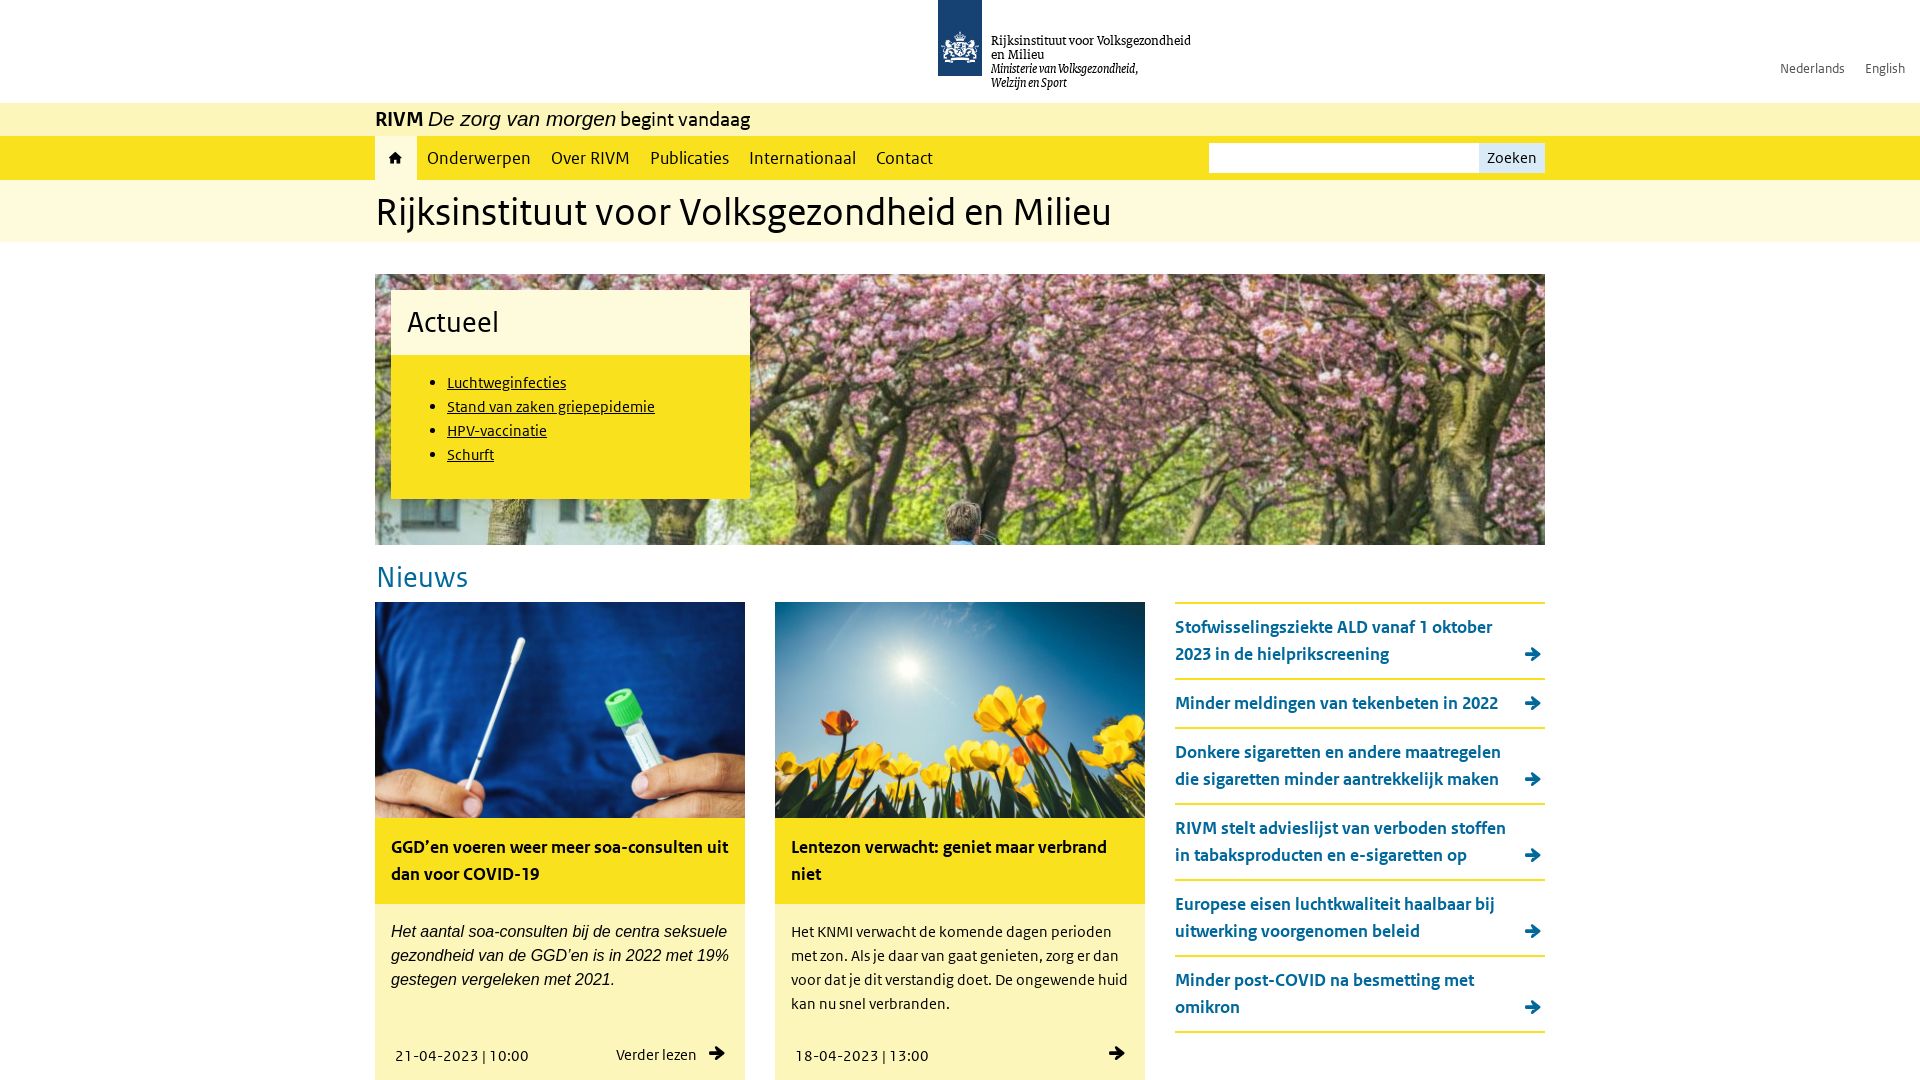 Estado web rivm.nl está   ONLINE